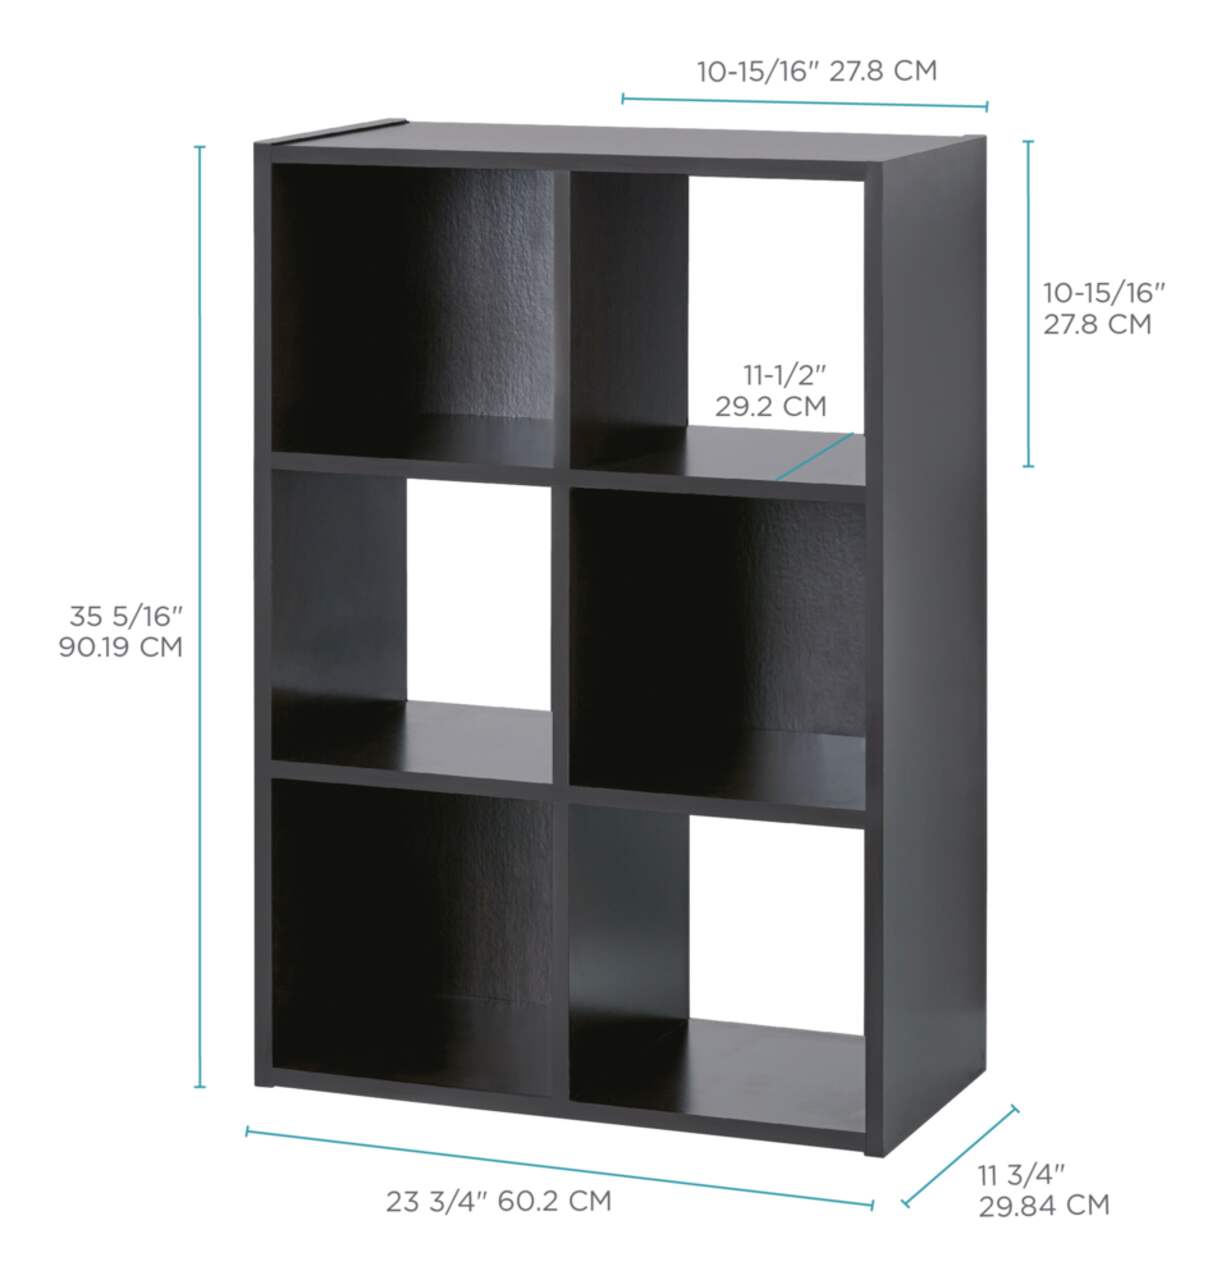 CANVAS Invermere 4-Cube Storage Organizer, Bookcase/Bookshelf